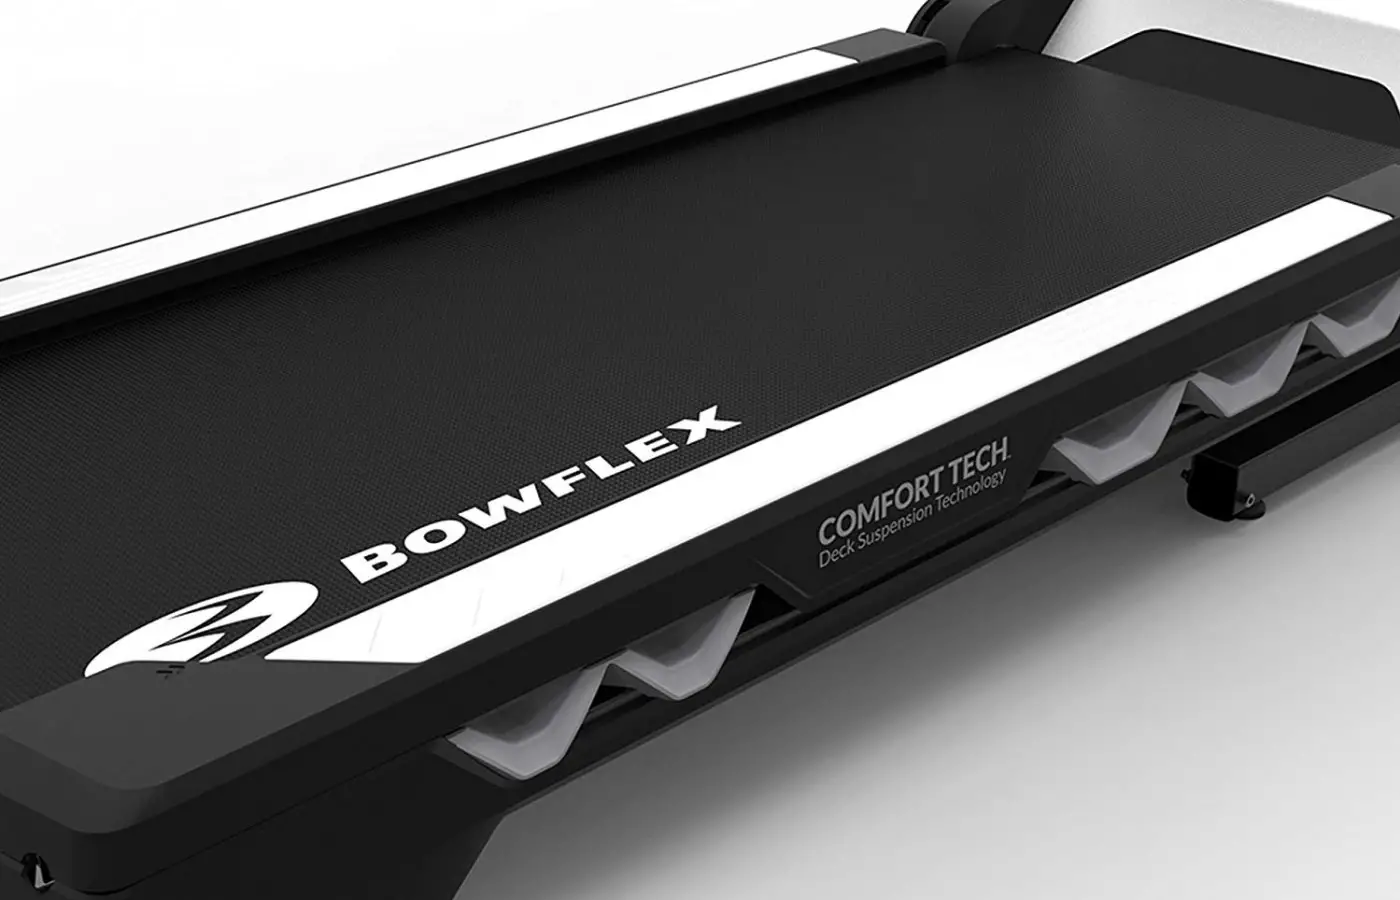 bowflex bxt216 deck